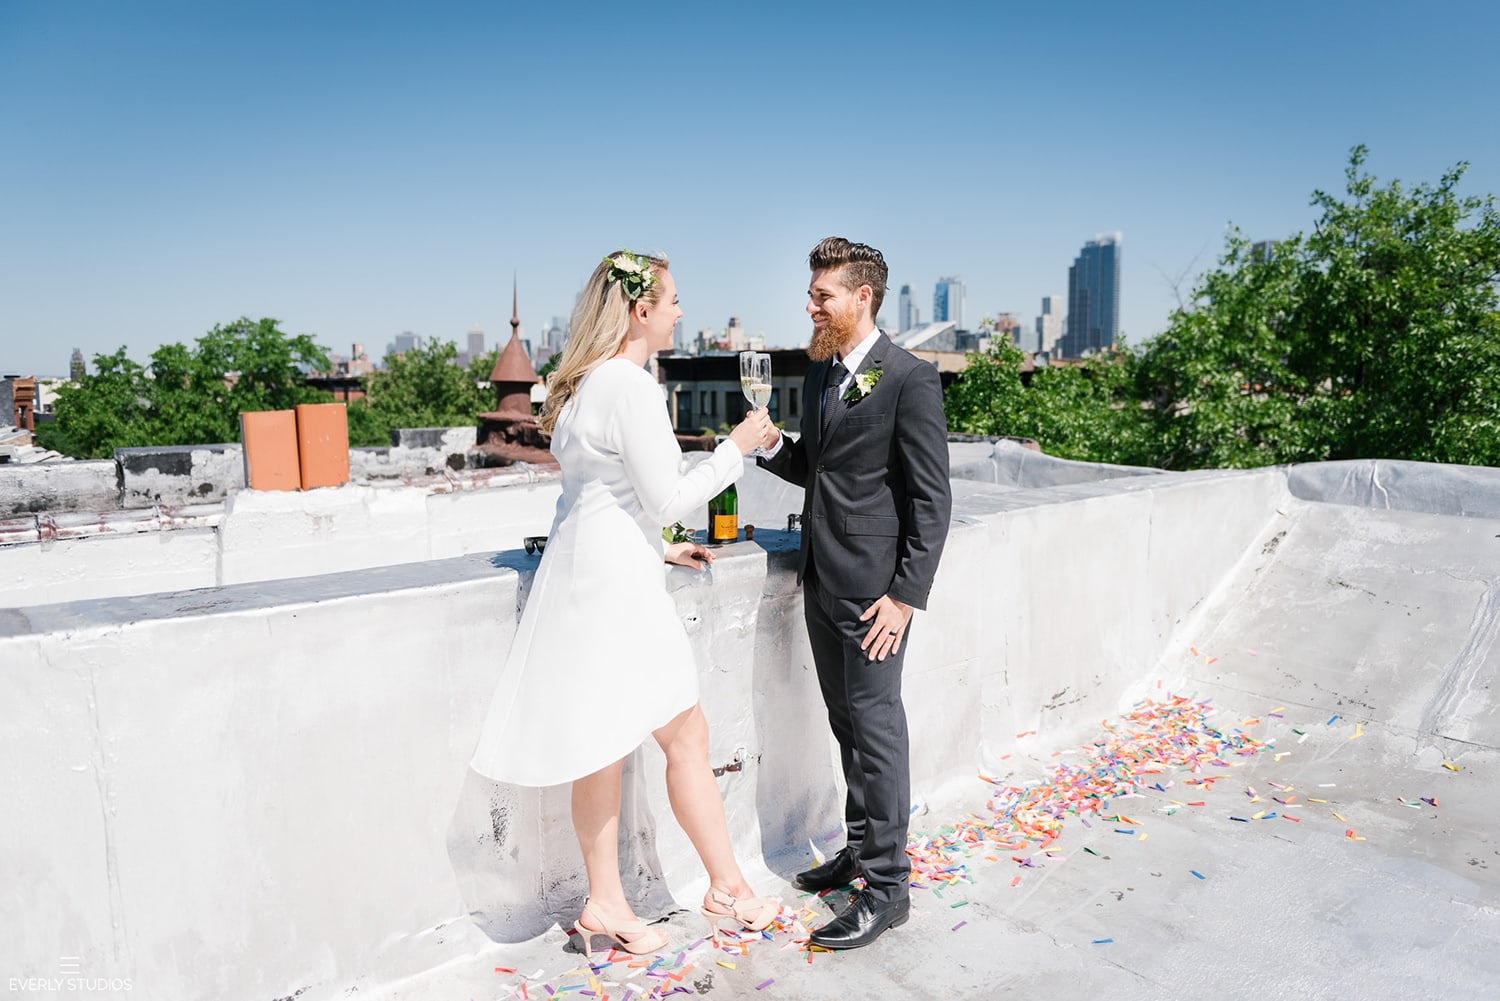 Fun outdoor Brooklyn wedding. Rooftop wedding photos. Photos by Brooklyn wedding photographer Everly Studios, www.everlystudios.com